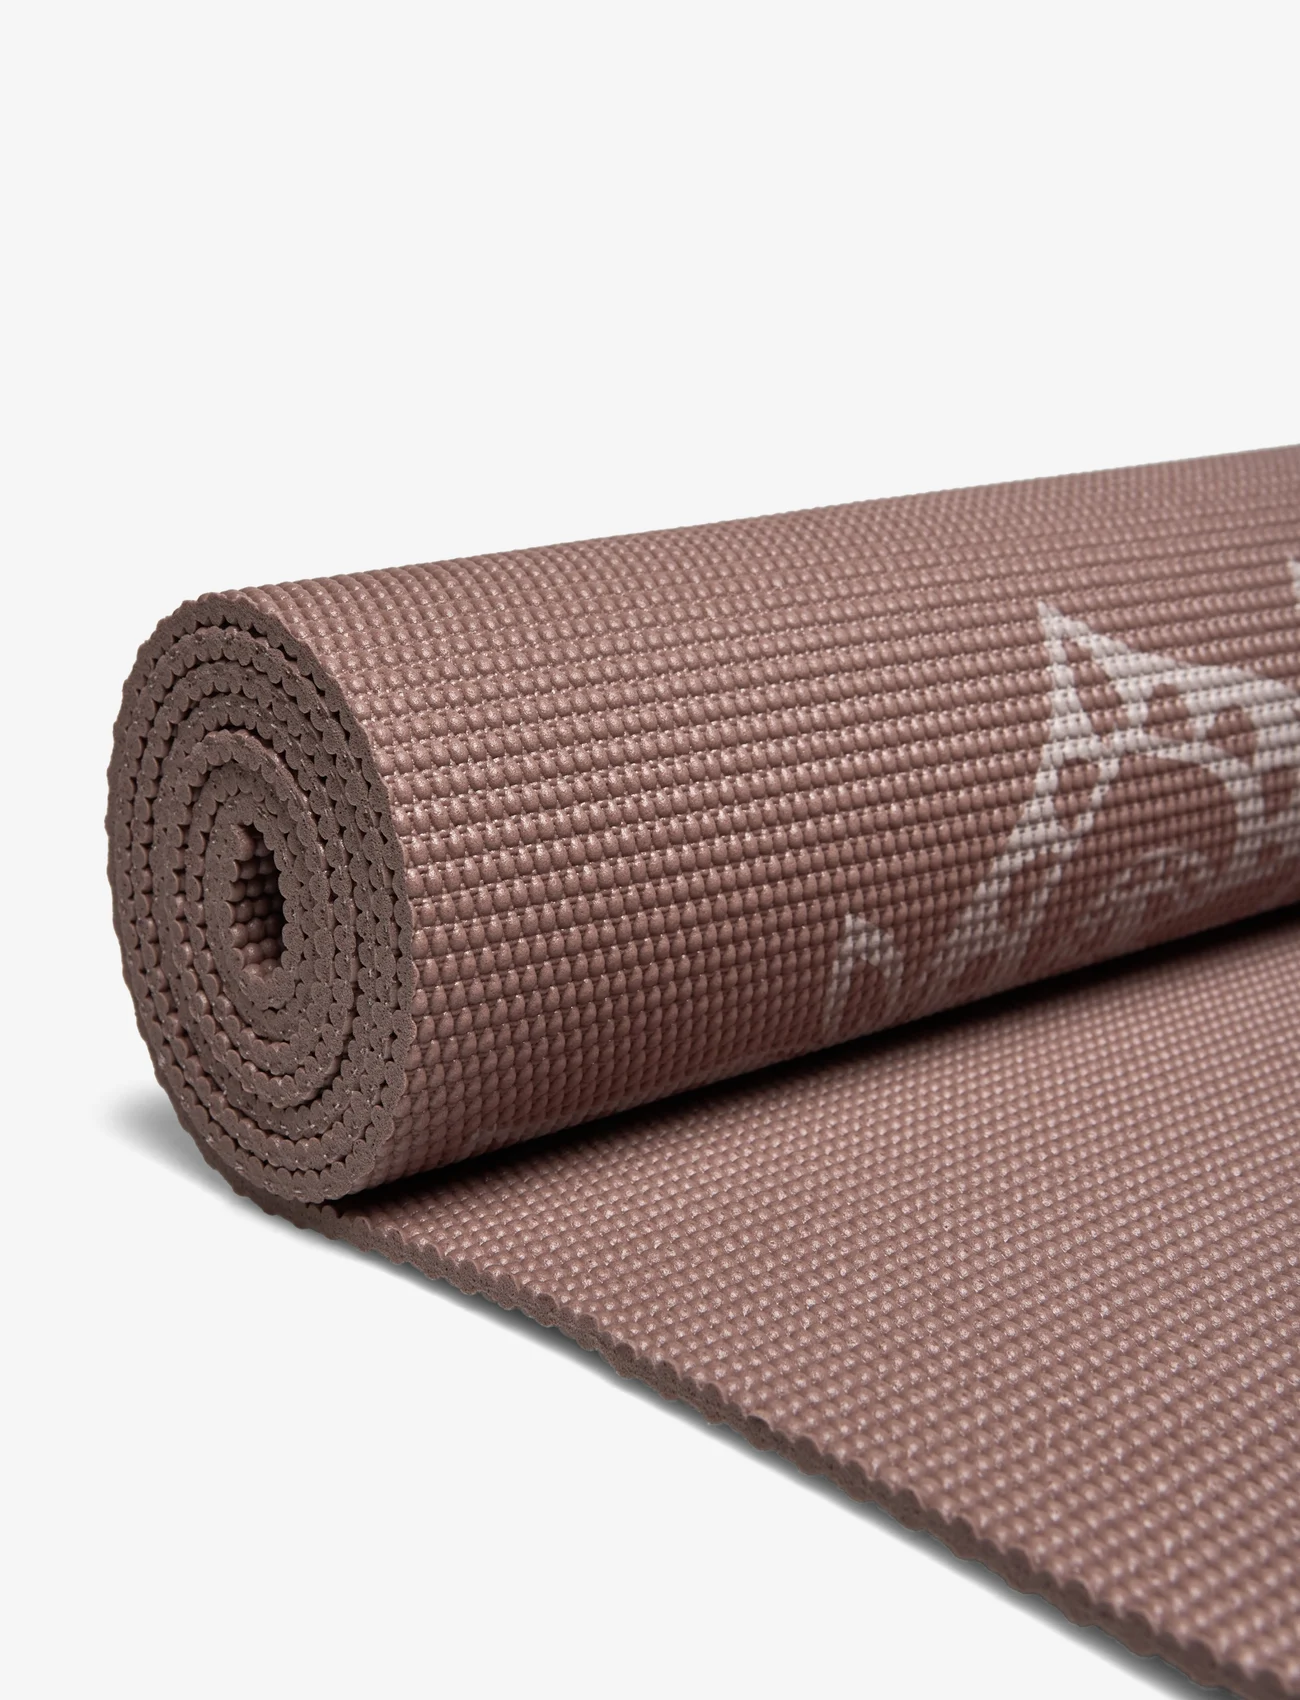 Gaiam - Cinnamon Marrakesh Yoga Mat 5mm Classic Printed - yogamatter og tilbehør - cinnamon - 1